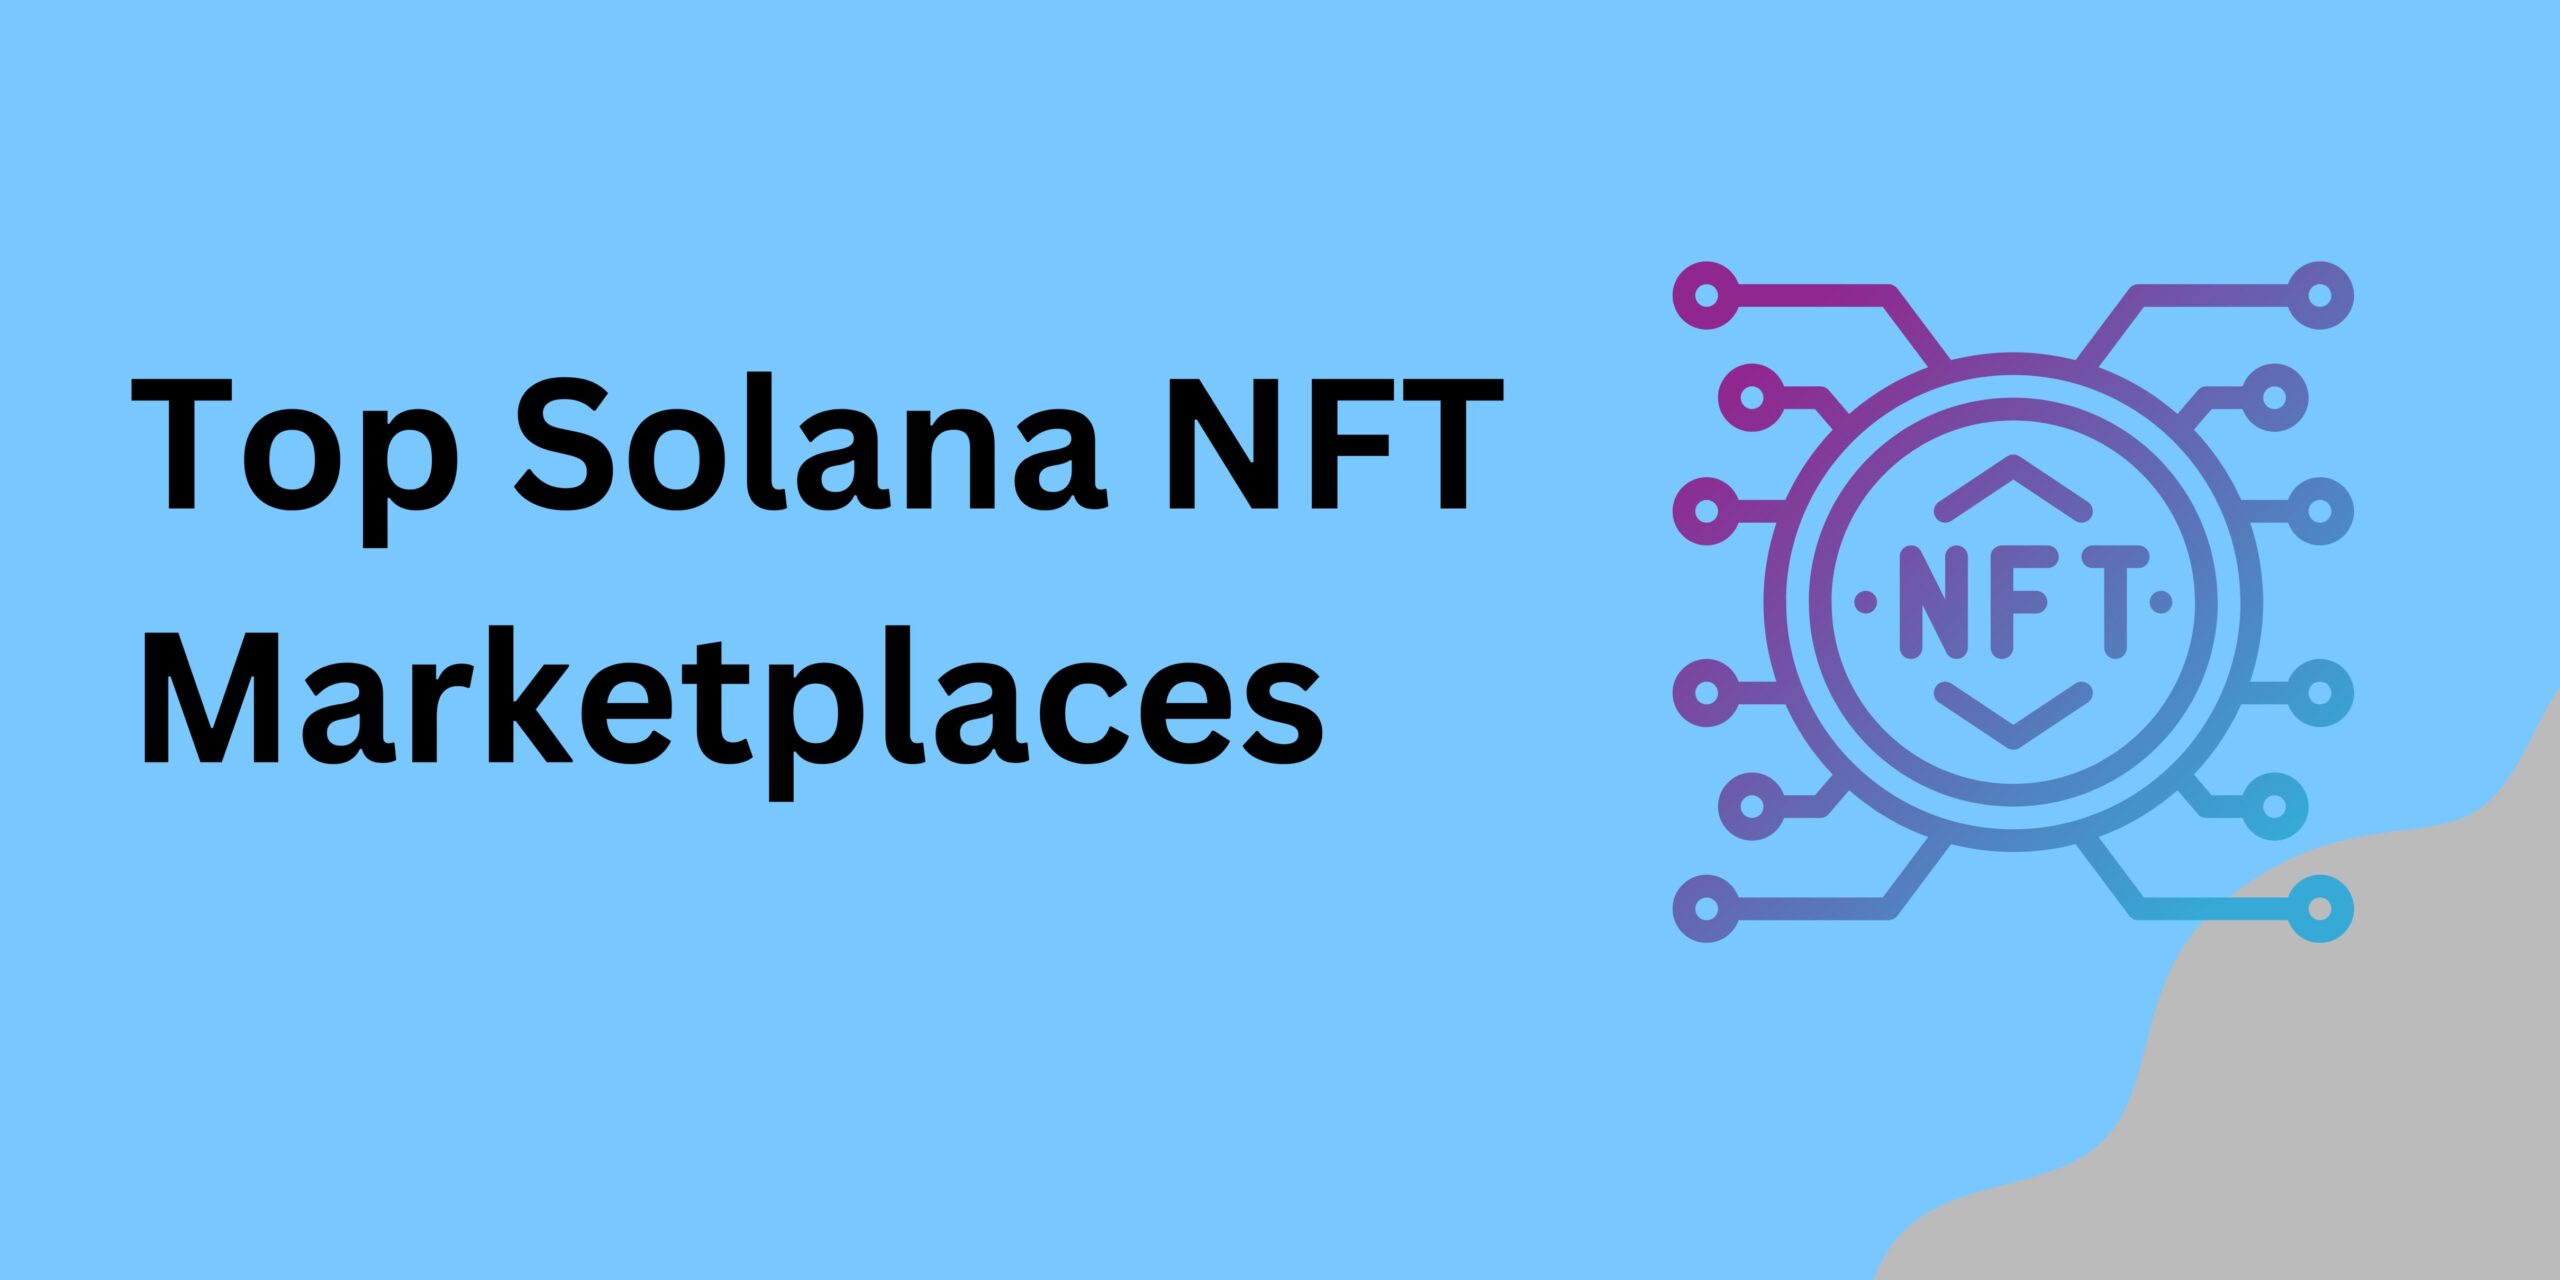 A List of Top Solana NFT Marketplaces to Explore